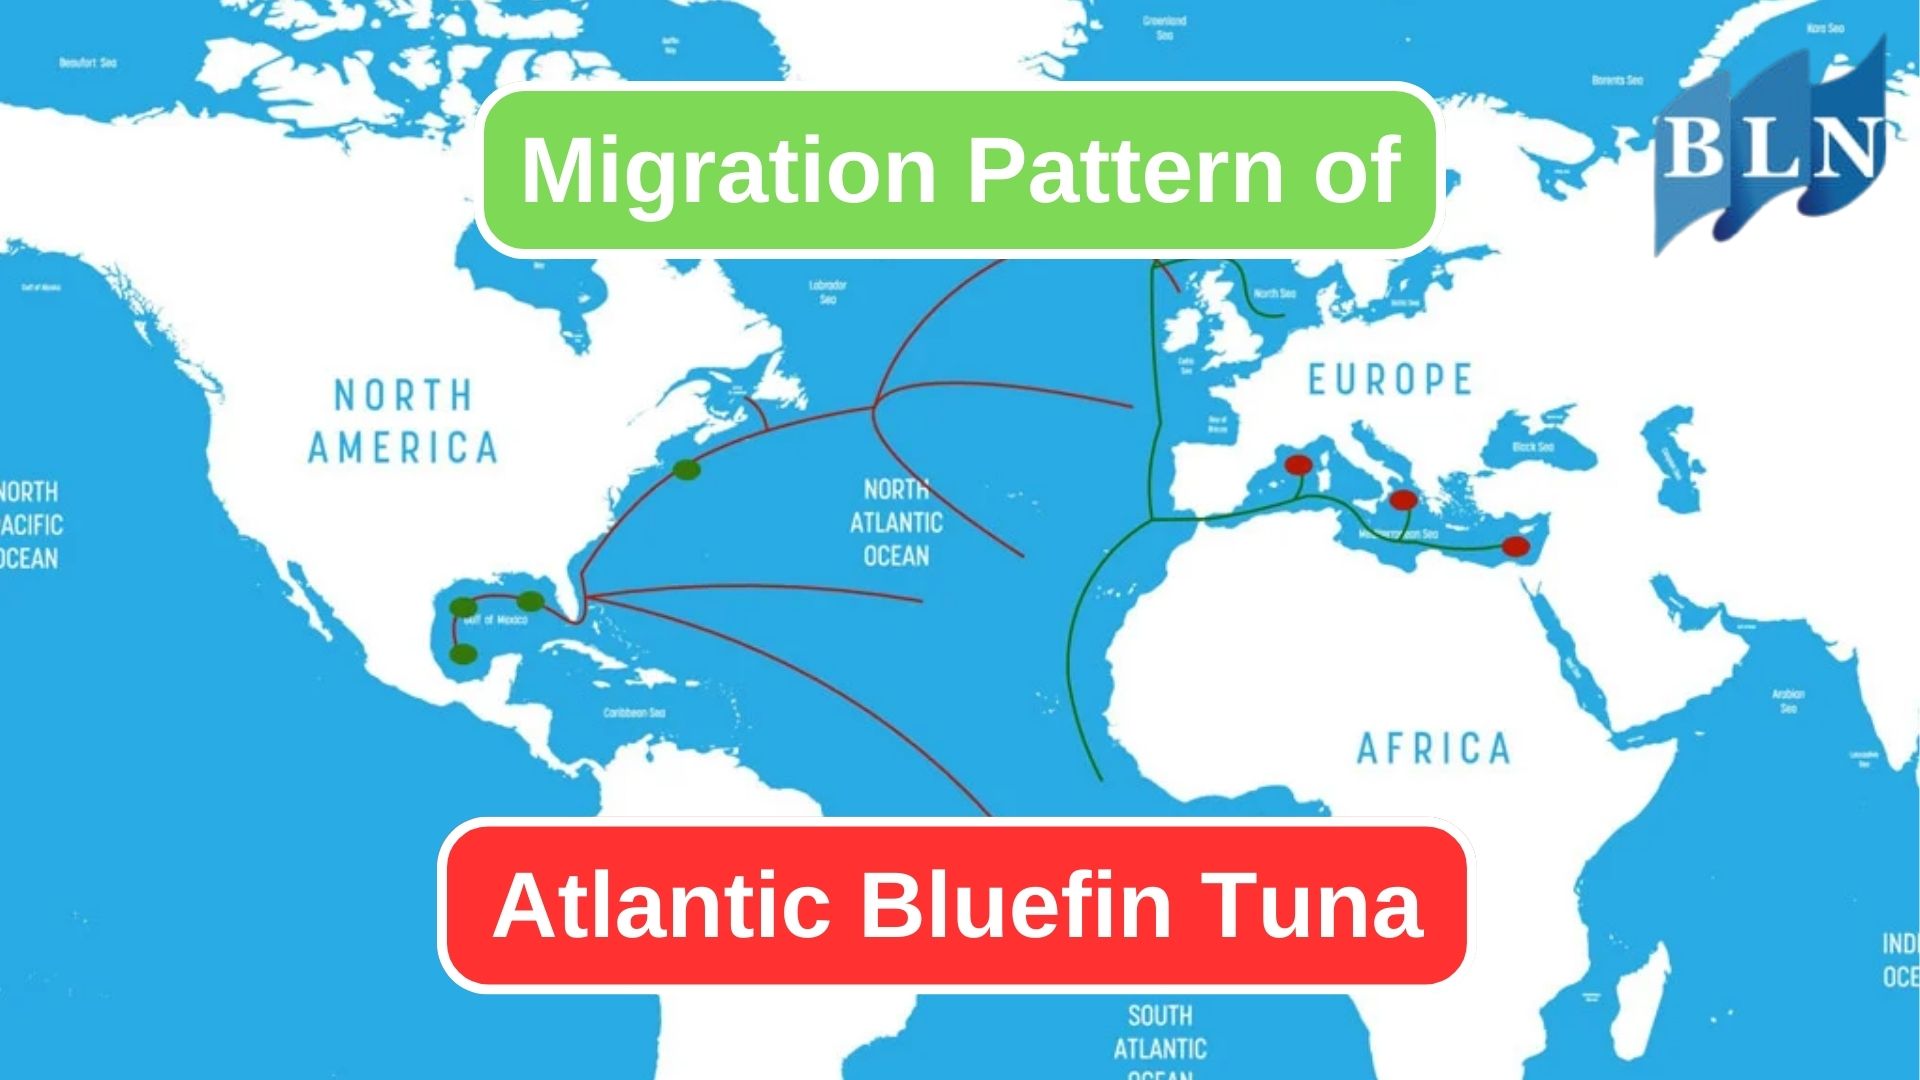 The Annual Journey of Atlantic Bluefin Tuna